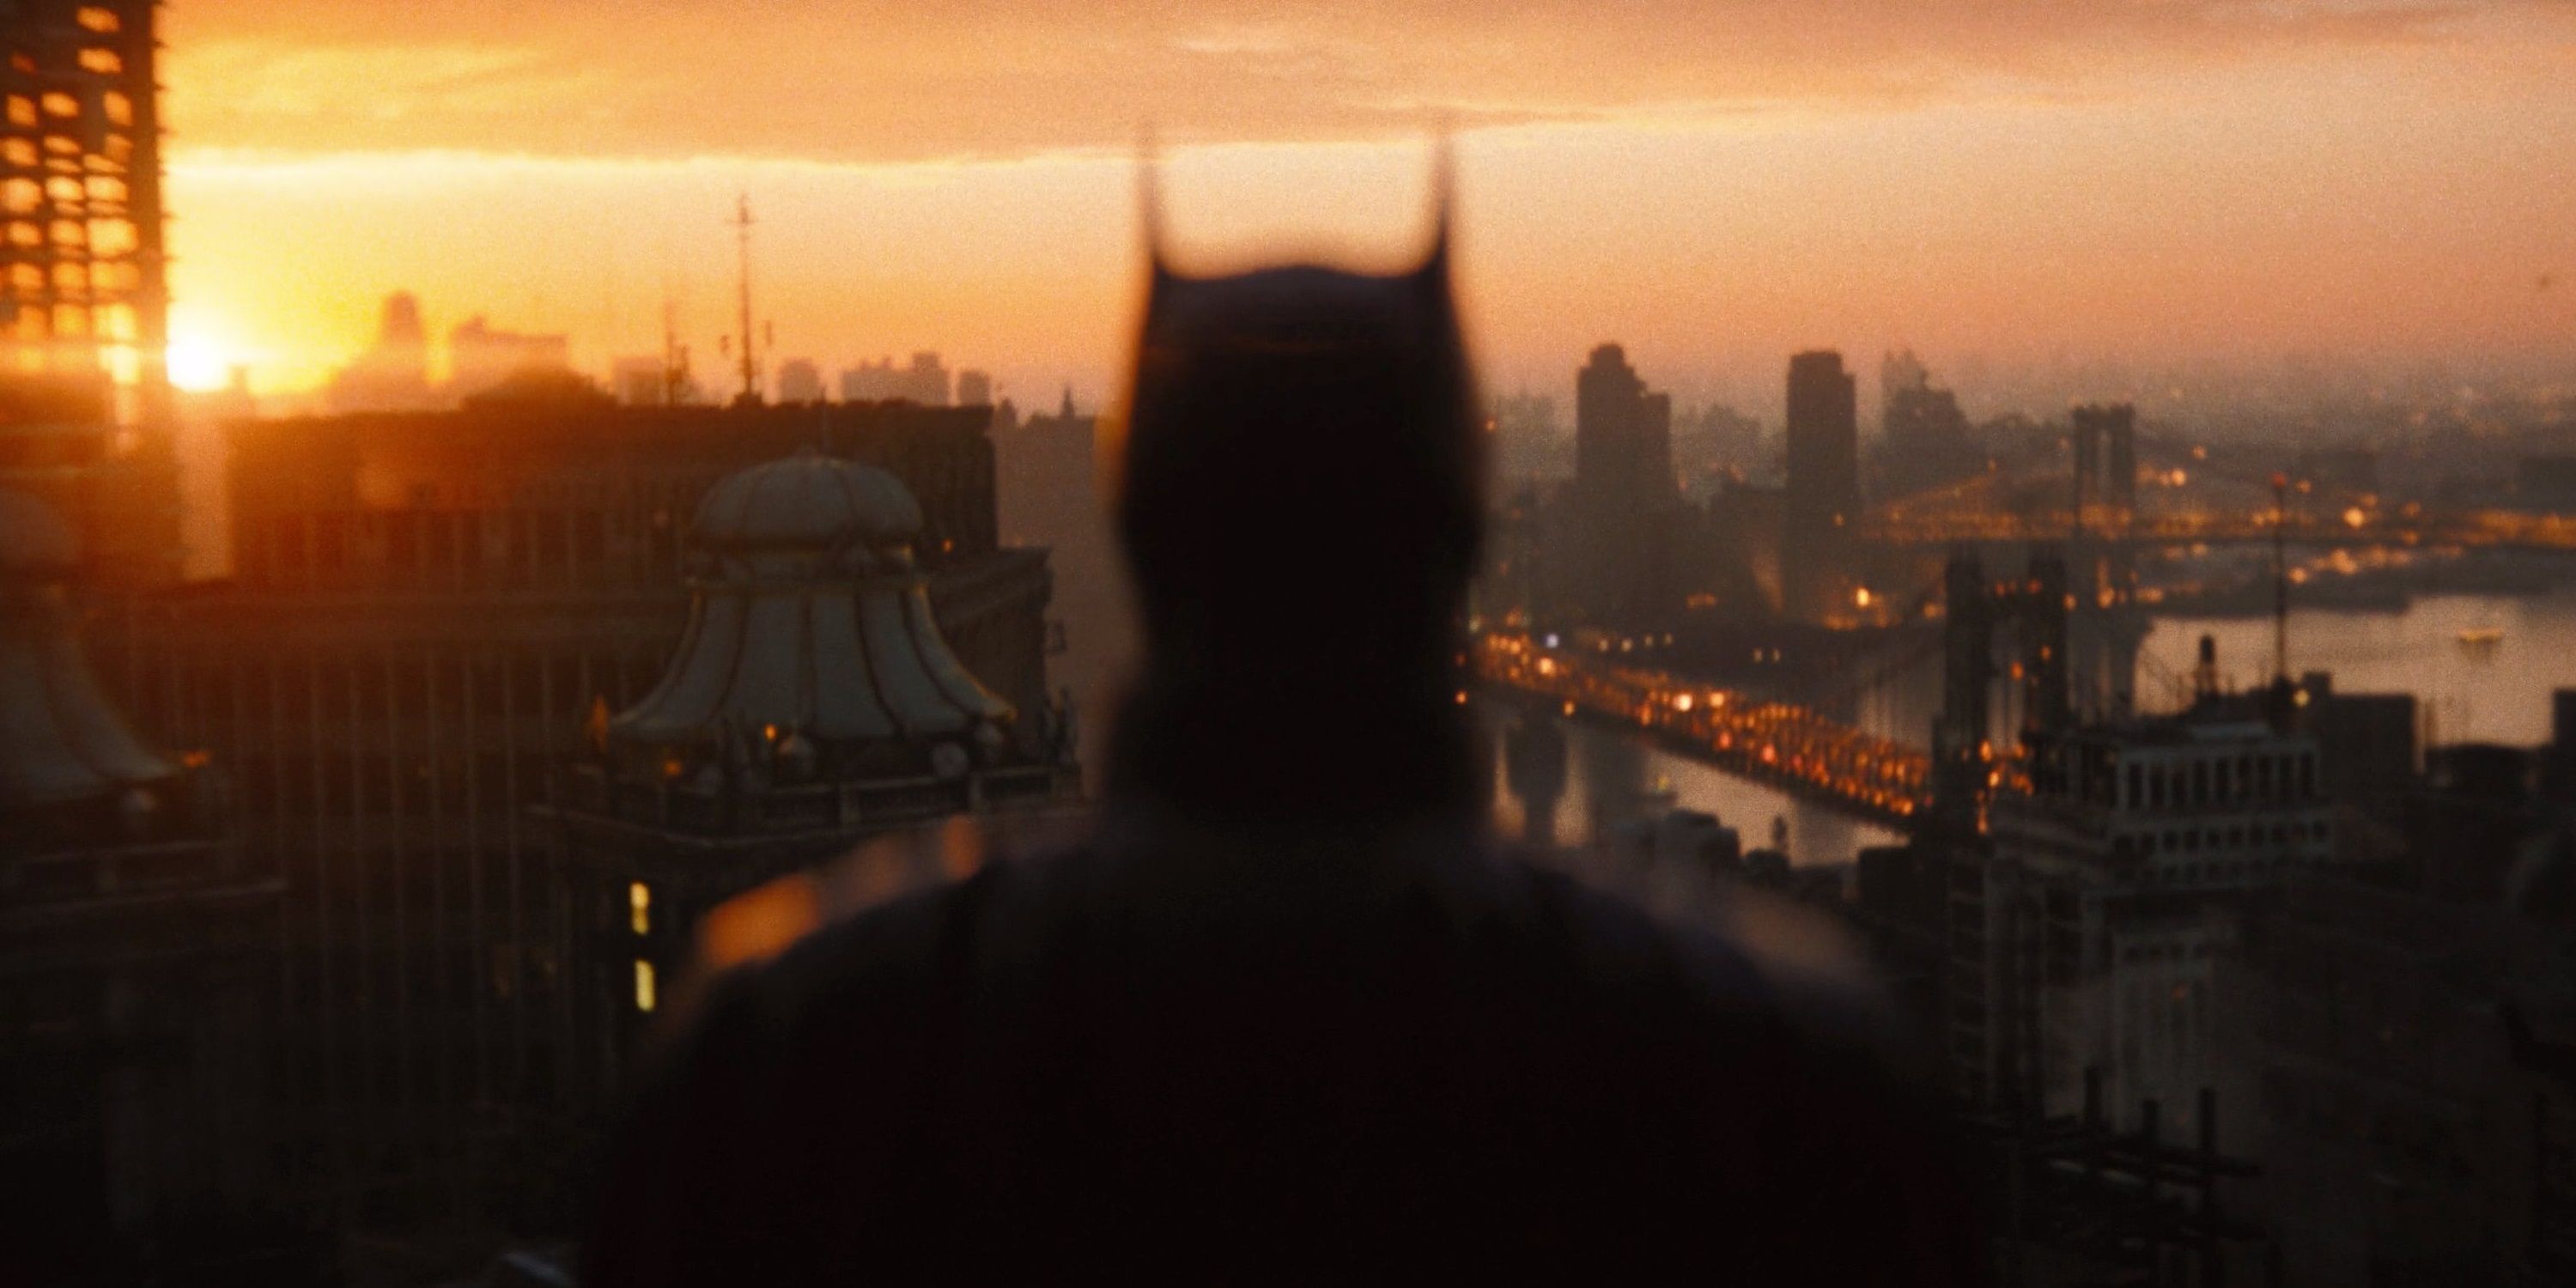 Batman watching over Gotham in The Batman